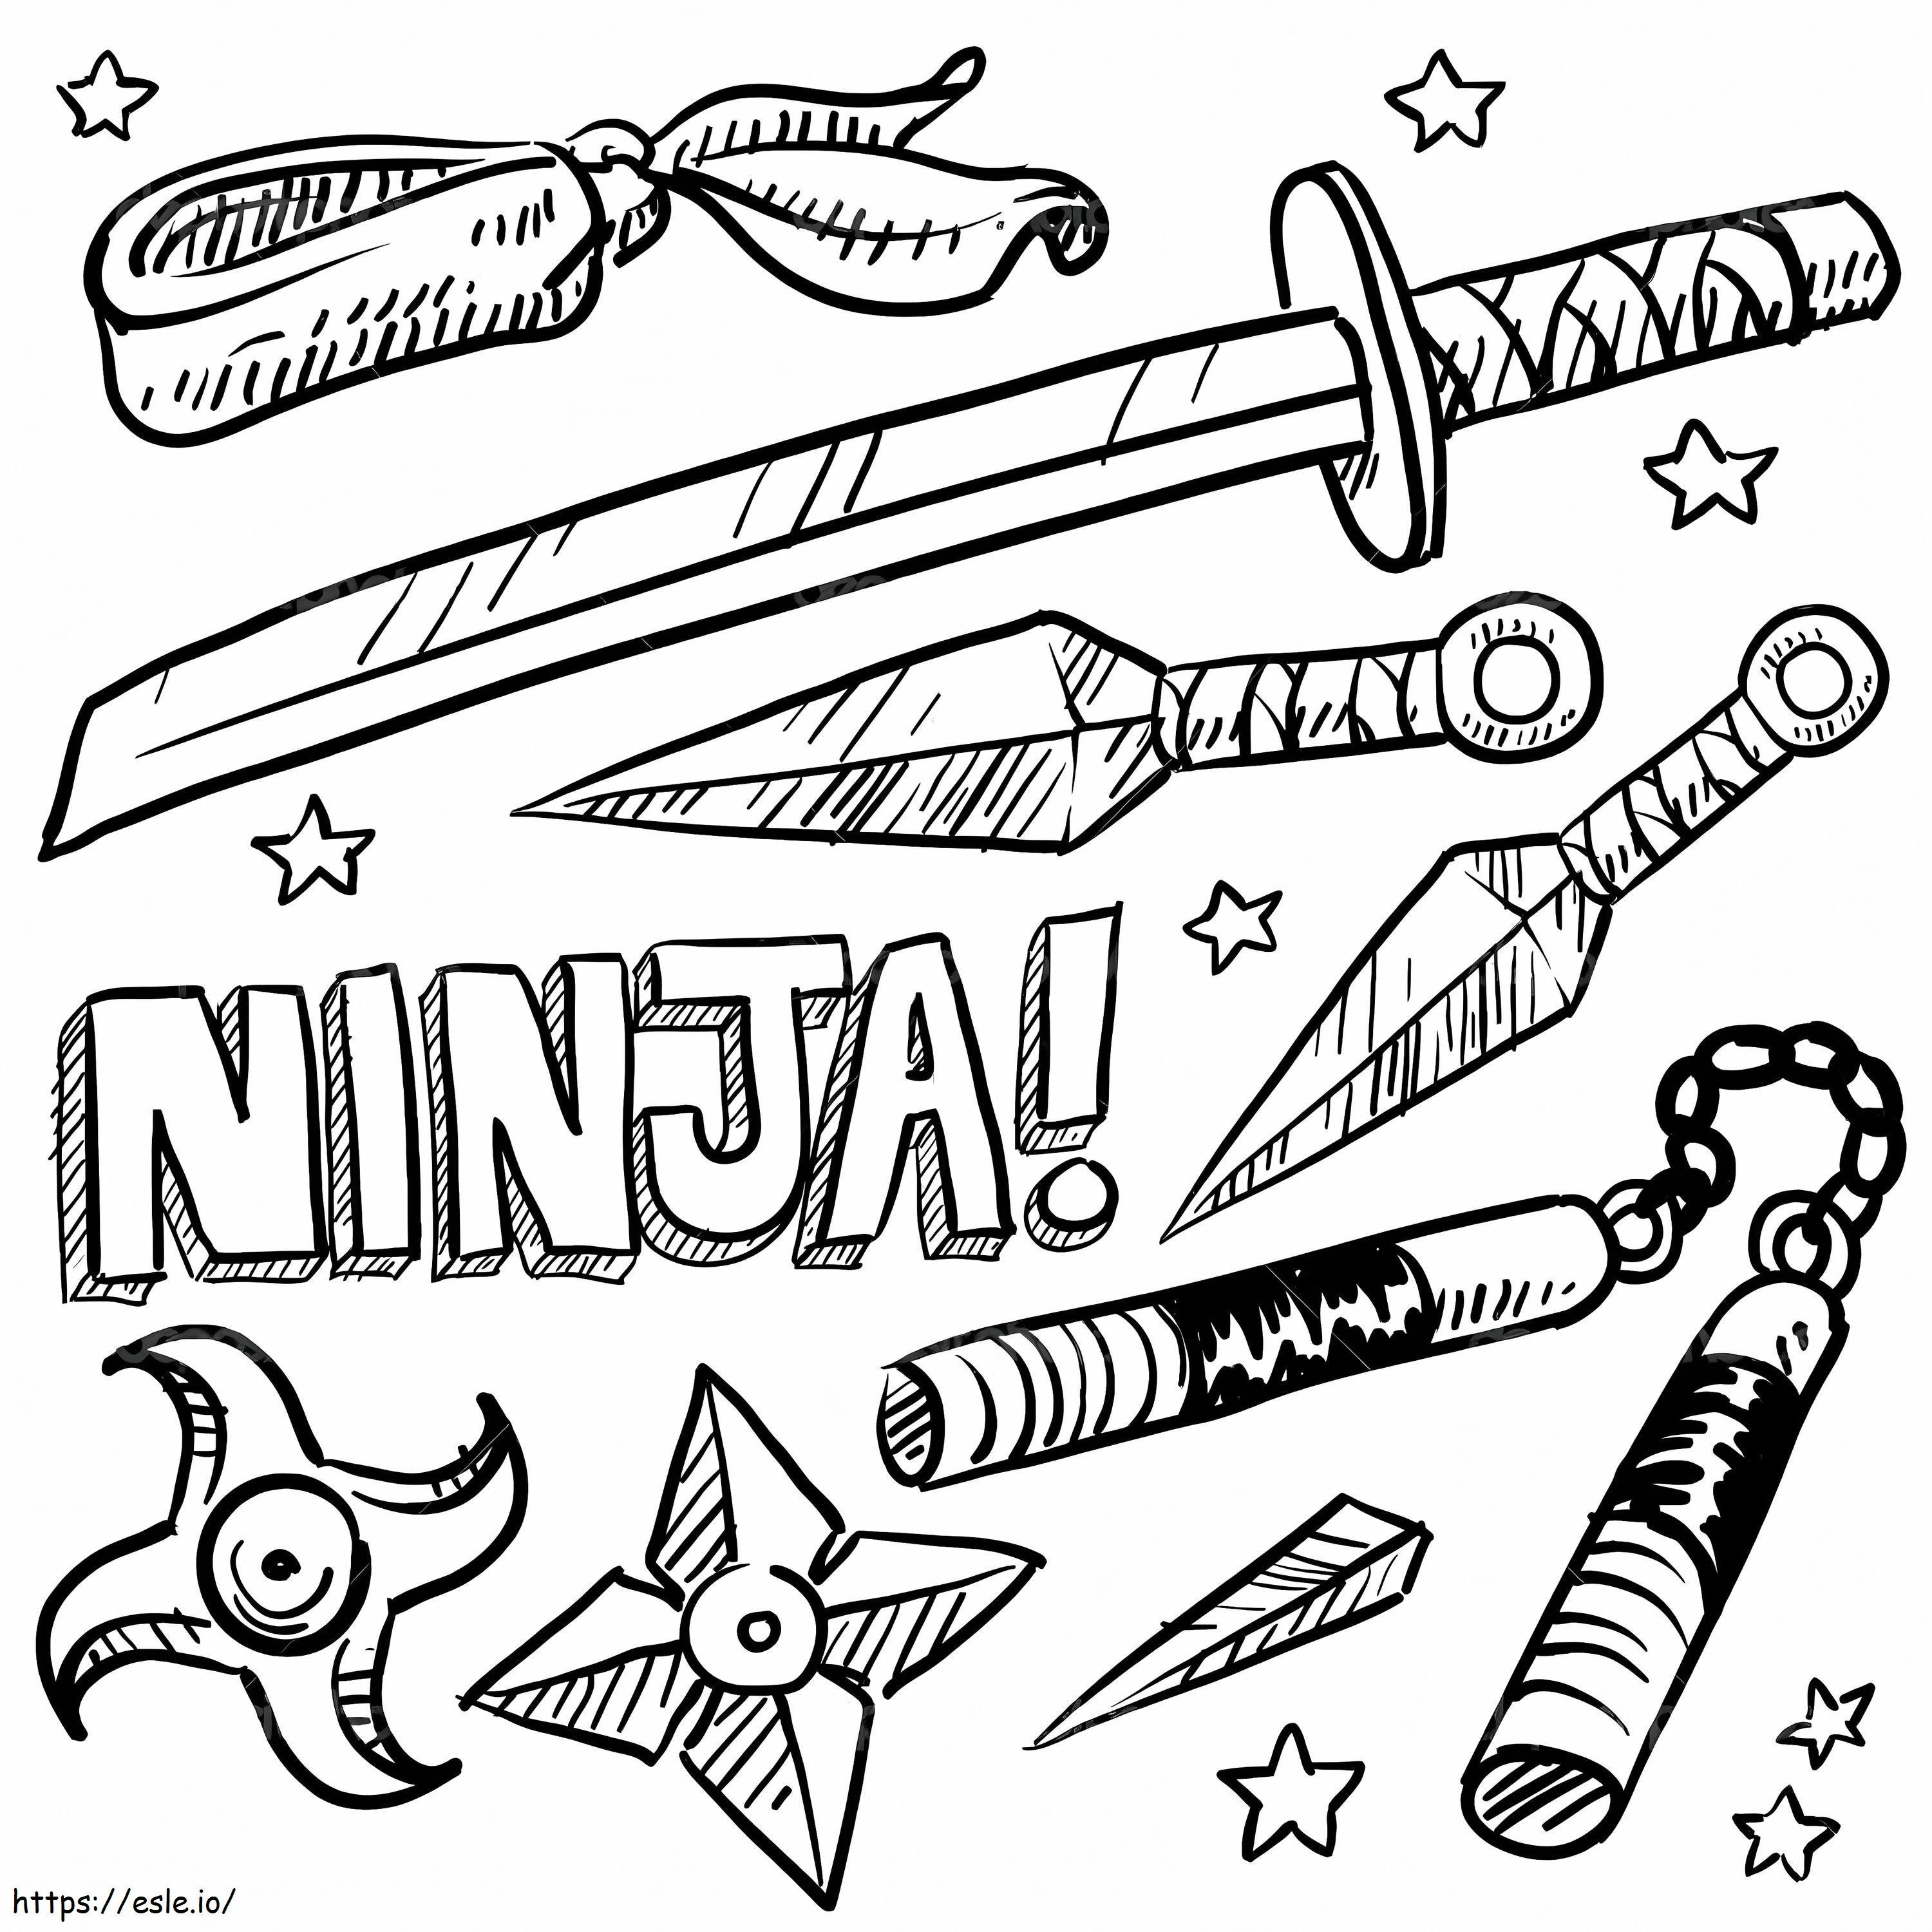 Drawing Ninja Weapons coloring page